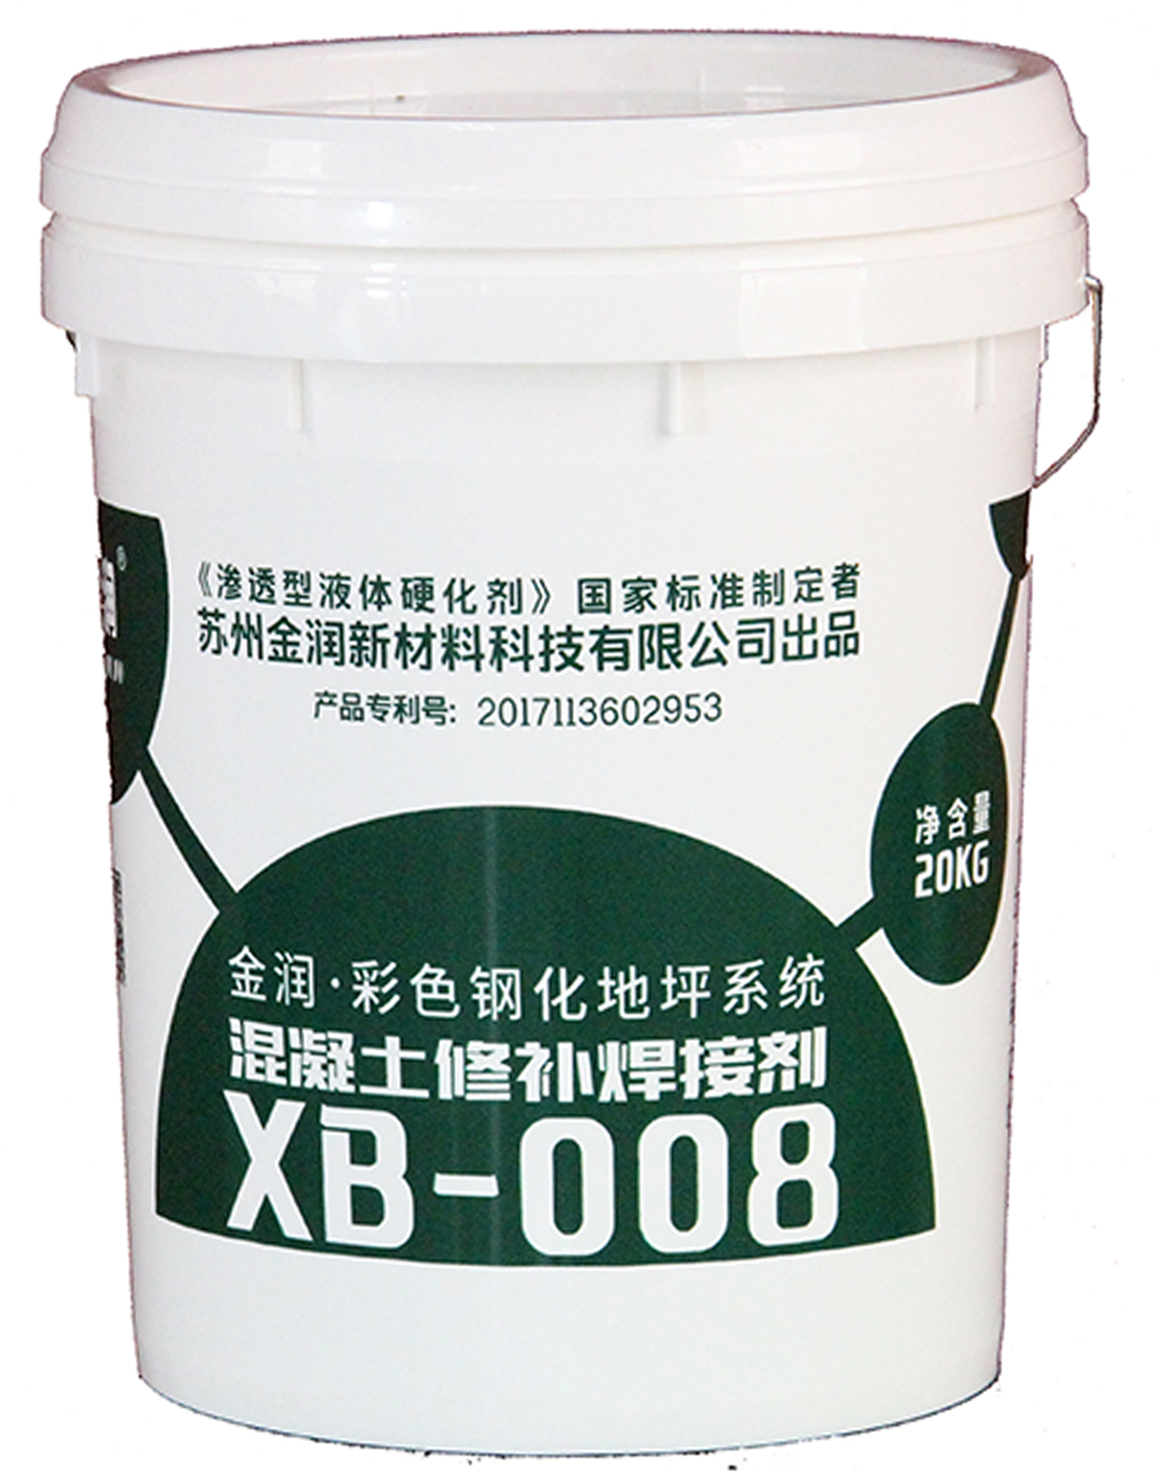 XB-008-金润混凝土修补剂